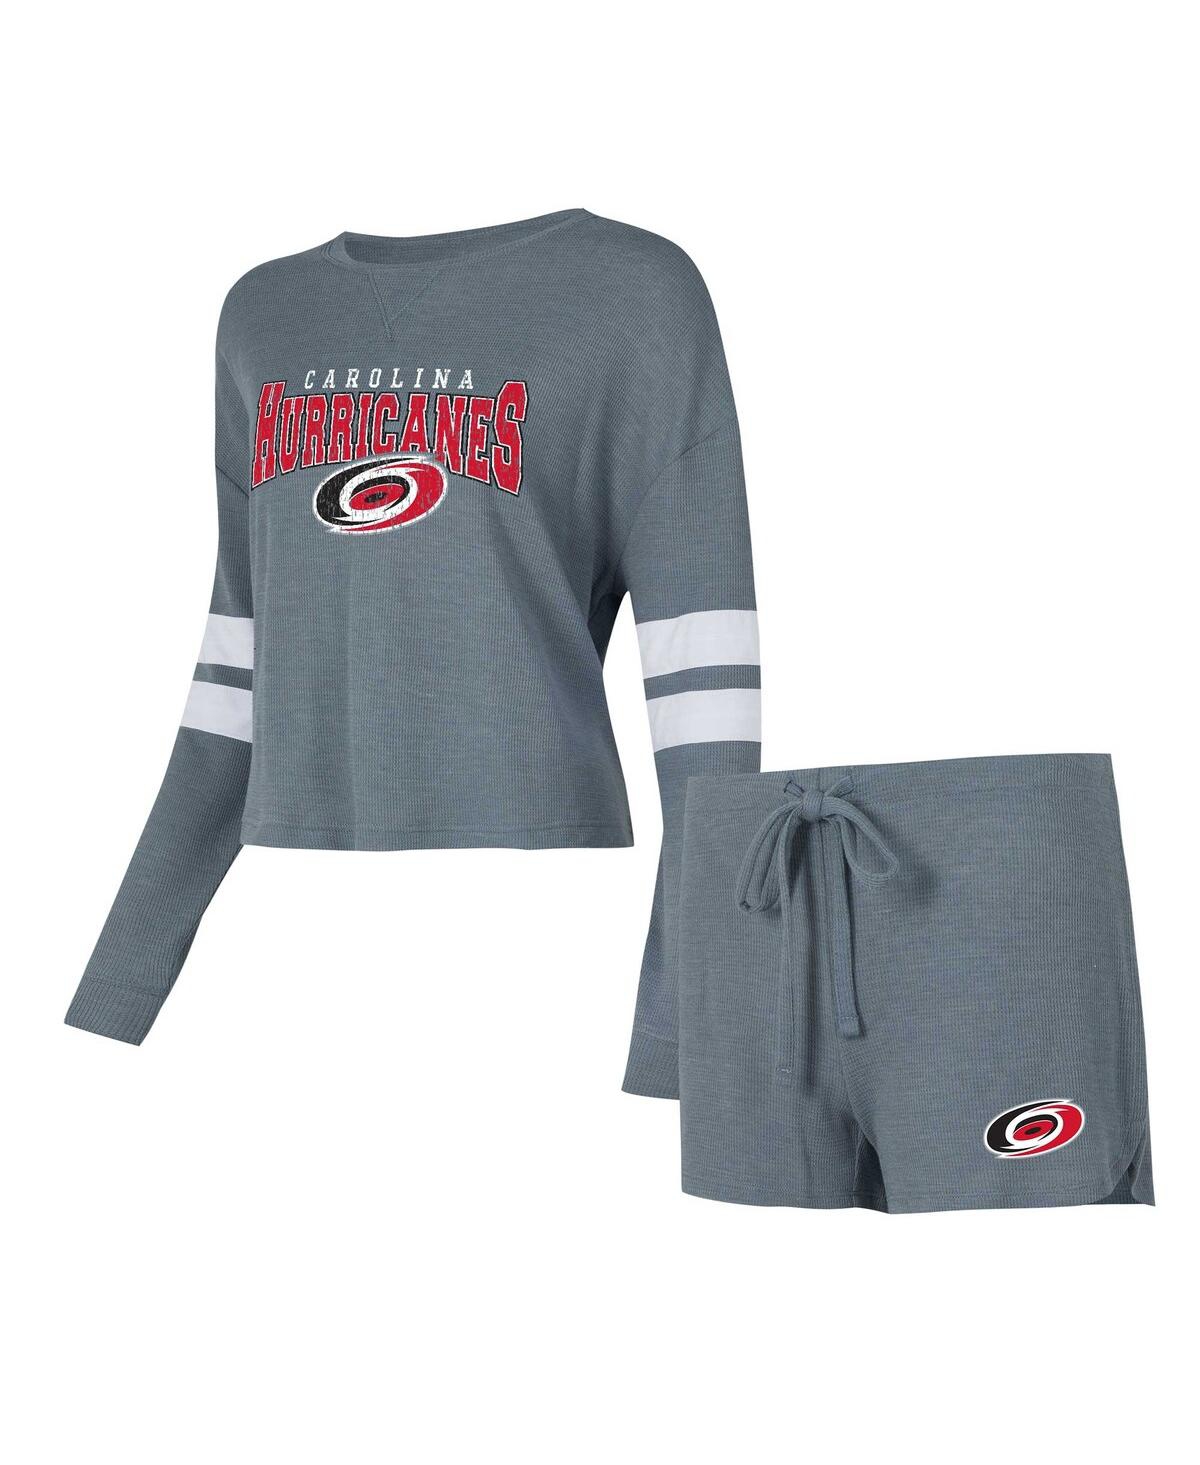 Women's Concepts Sport Gray Distressed Carolina Hurricanes Meadow Long Sleeve T-shirt and Shorts Sleep Set - Gray